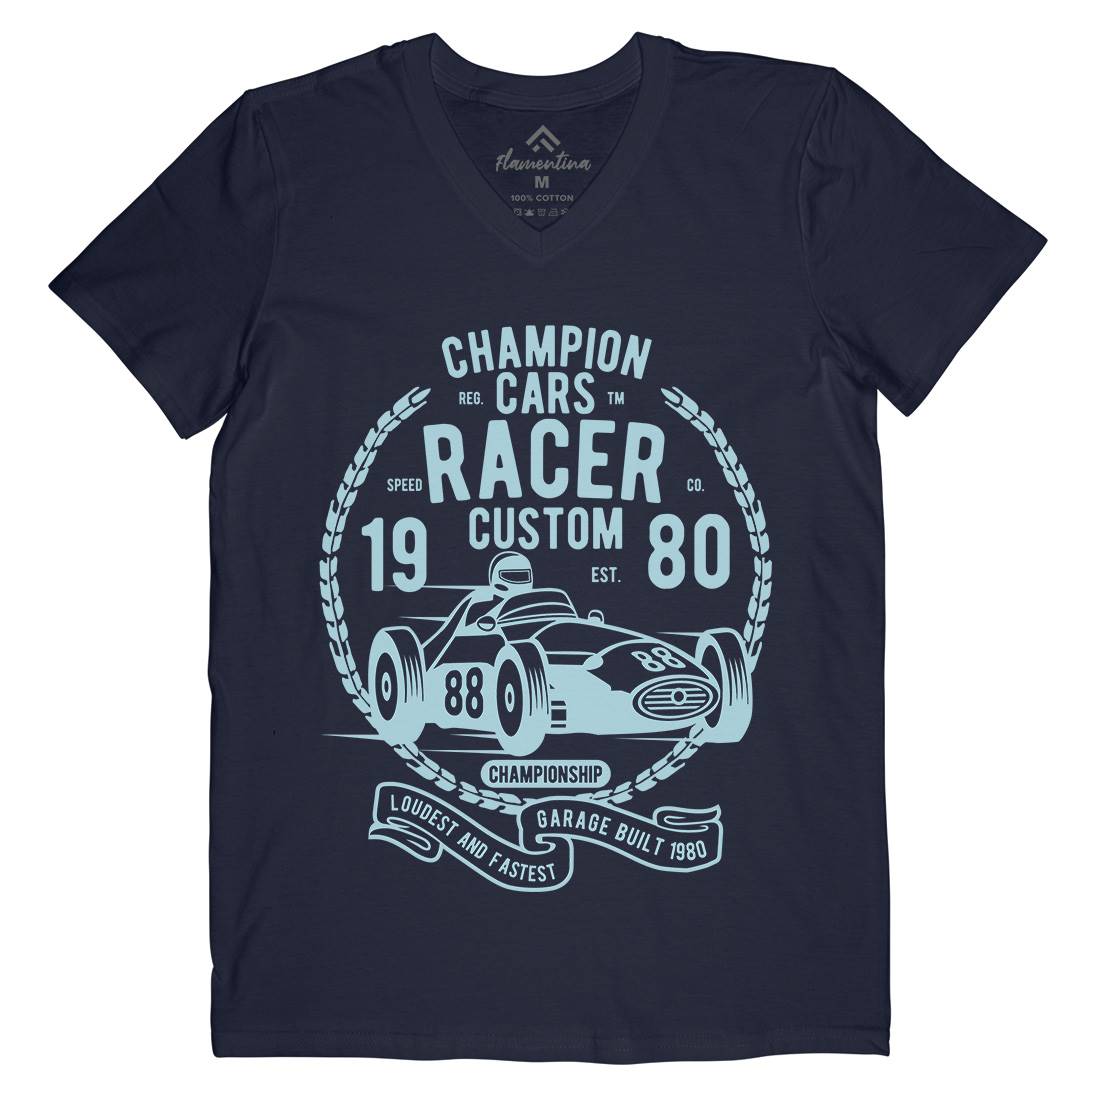 Champion Cars Racer Mens V-Neck T-Shirt Cars B395